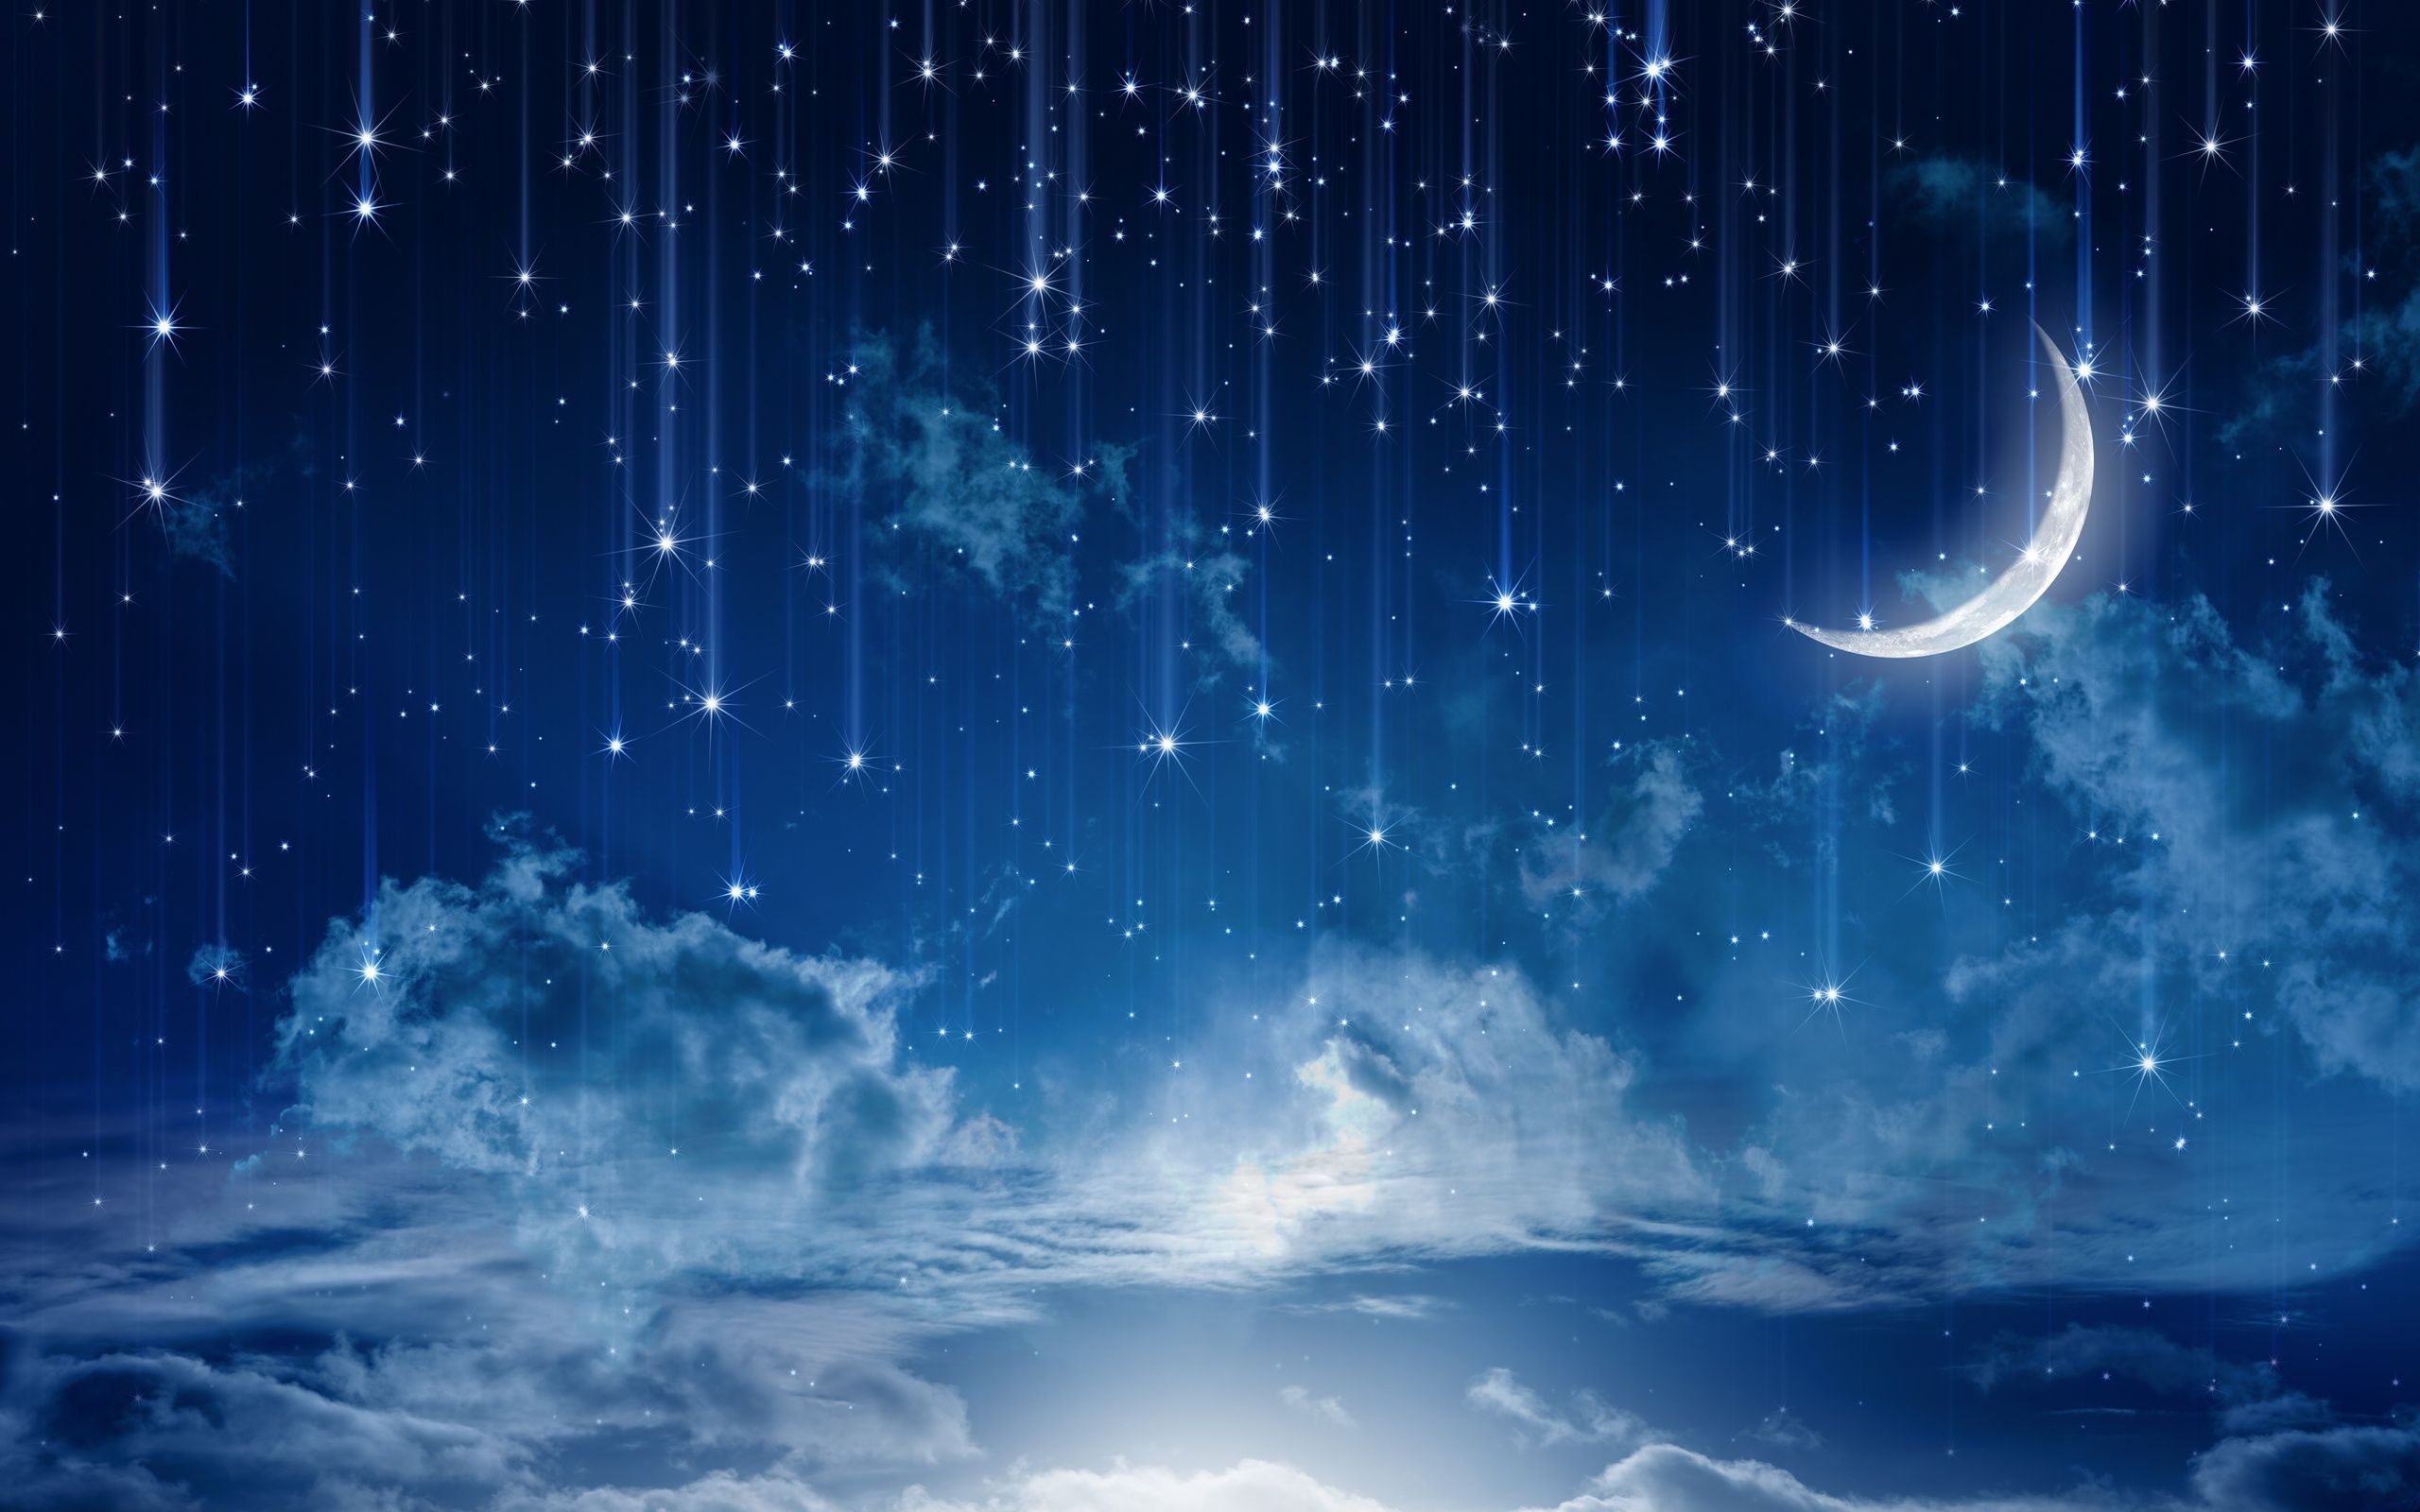 SKY MOONLIGHT NATURE NIGHT STARS CLOUDS RAIN LANDSCAPE MOON